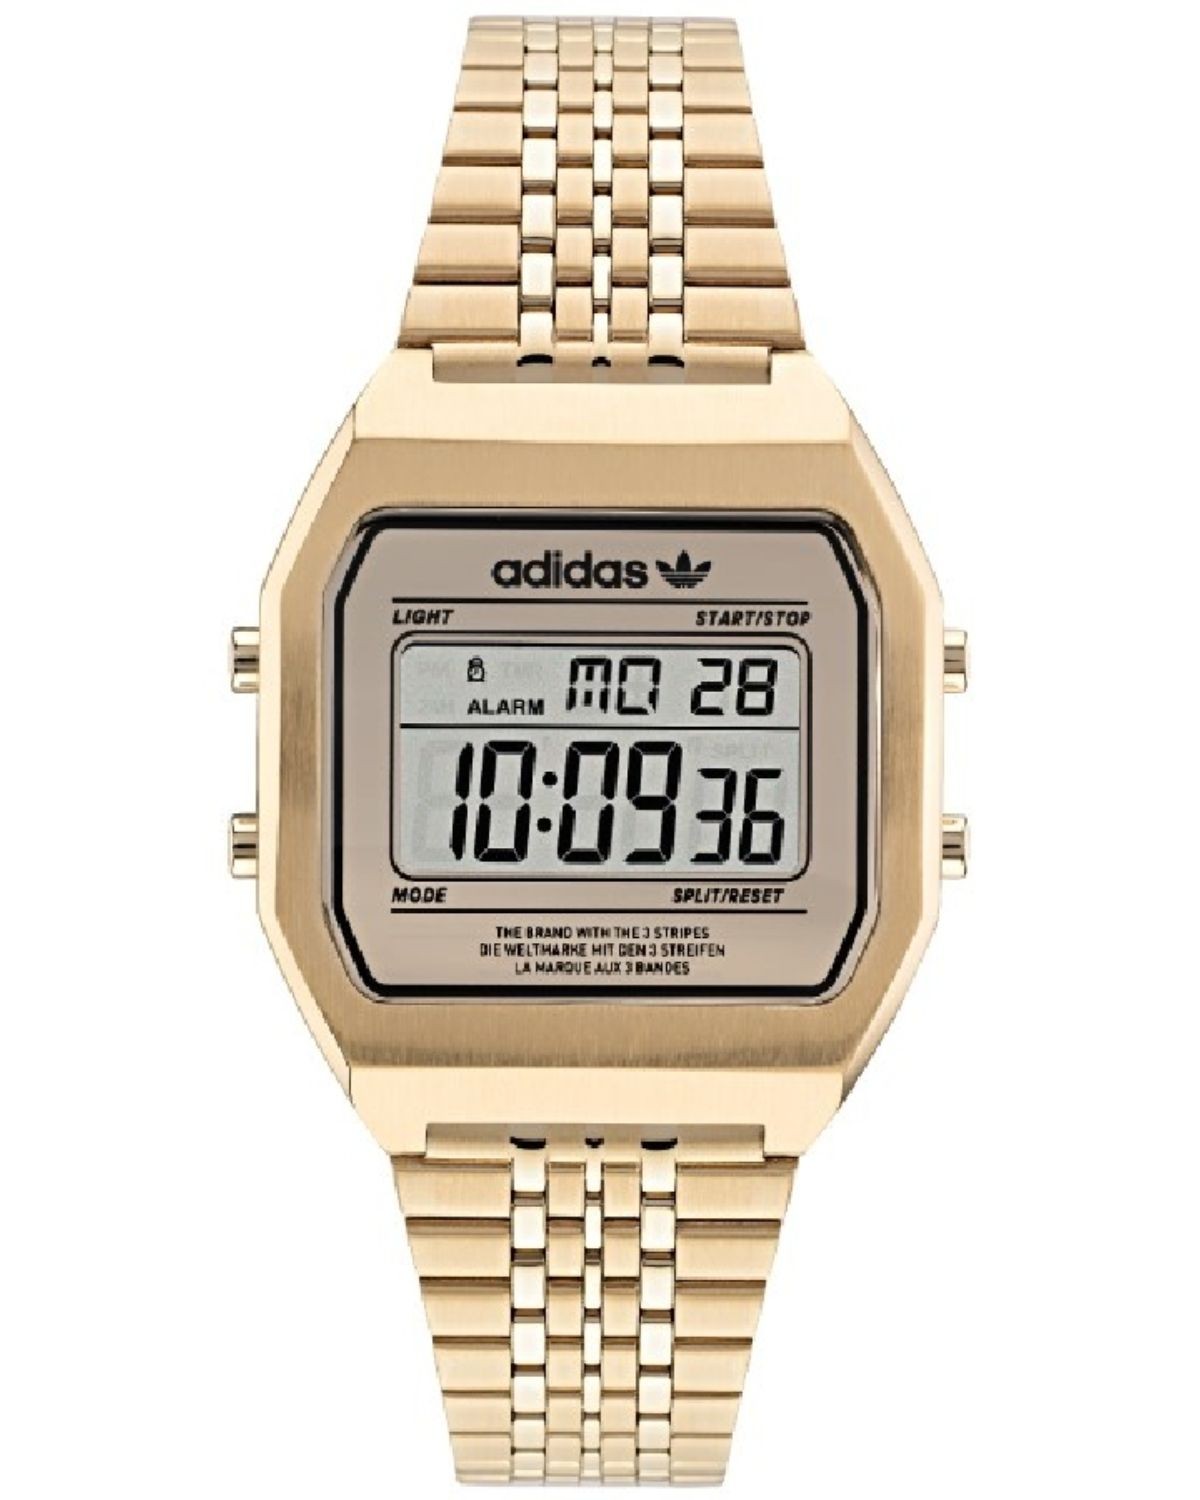 Adidas Originals Men\'s Watch gold men\'s Comprar Comprar watch | men\'s in Adidas AOST22074 | Digital in Two Two Digital stainless-steel Watch watch Barato gold Clicktime.eu» stainless-steel online Adidas